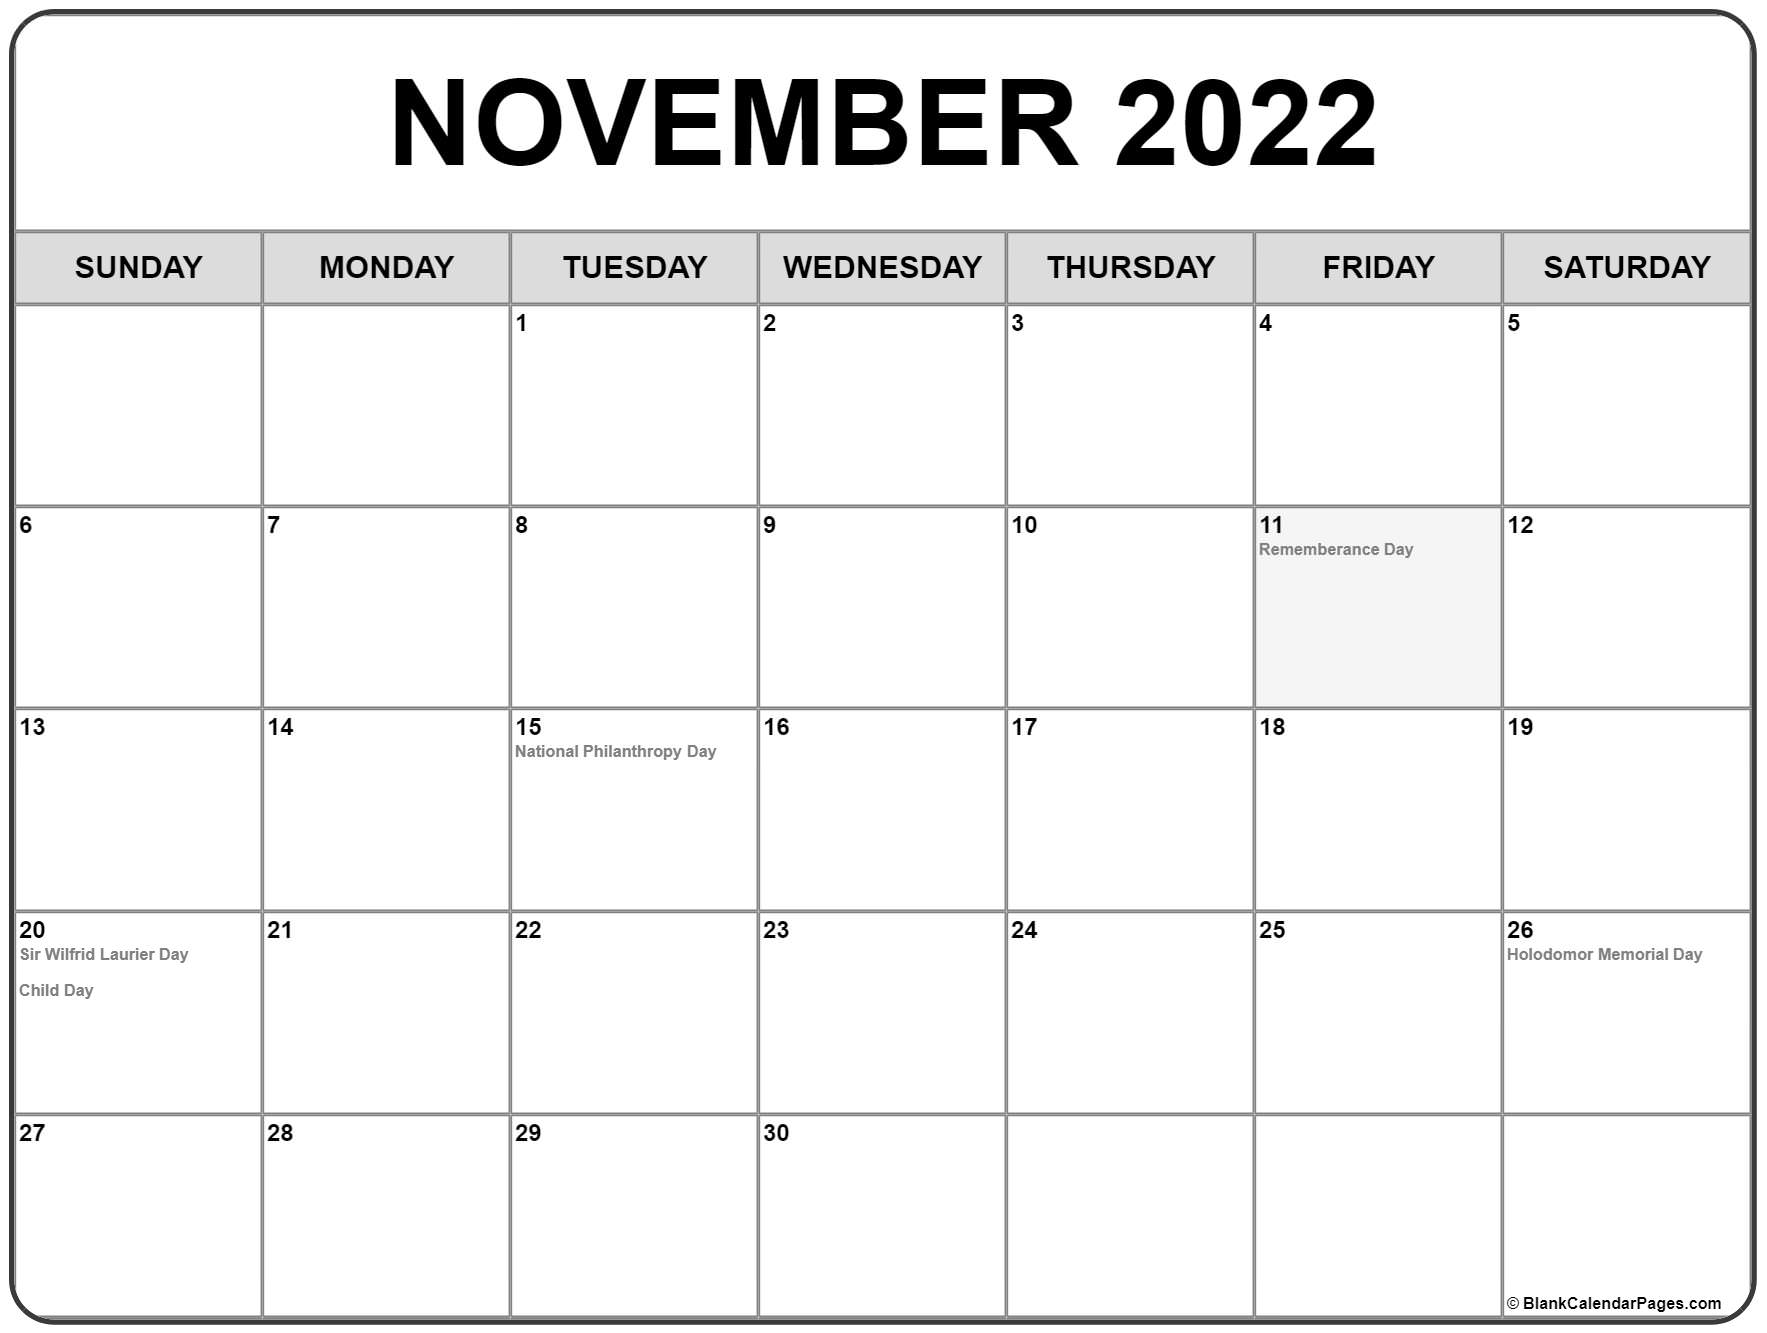 November 2022 calendar with holidays